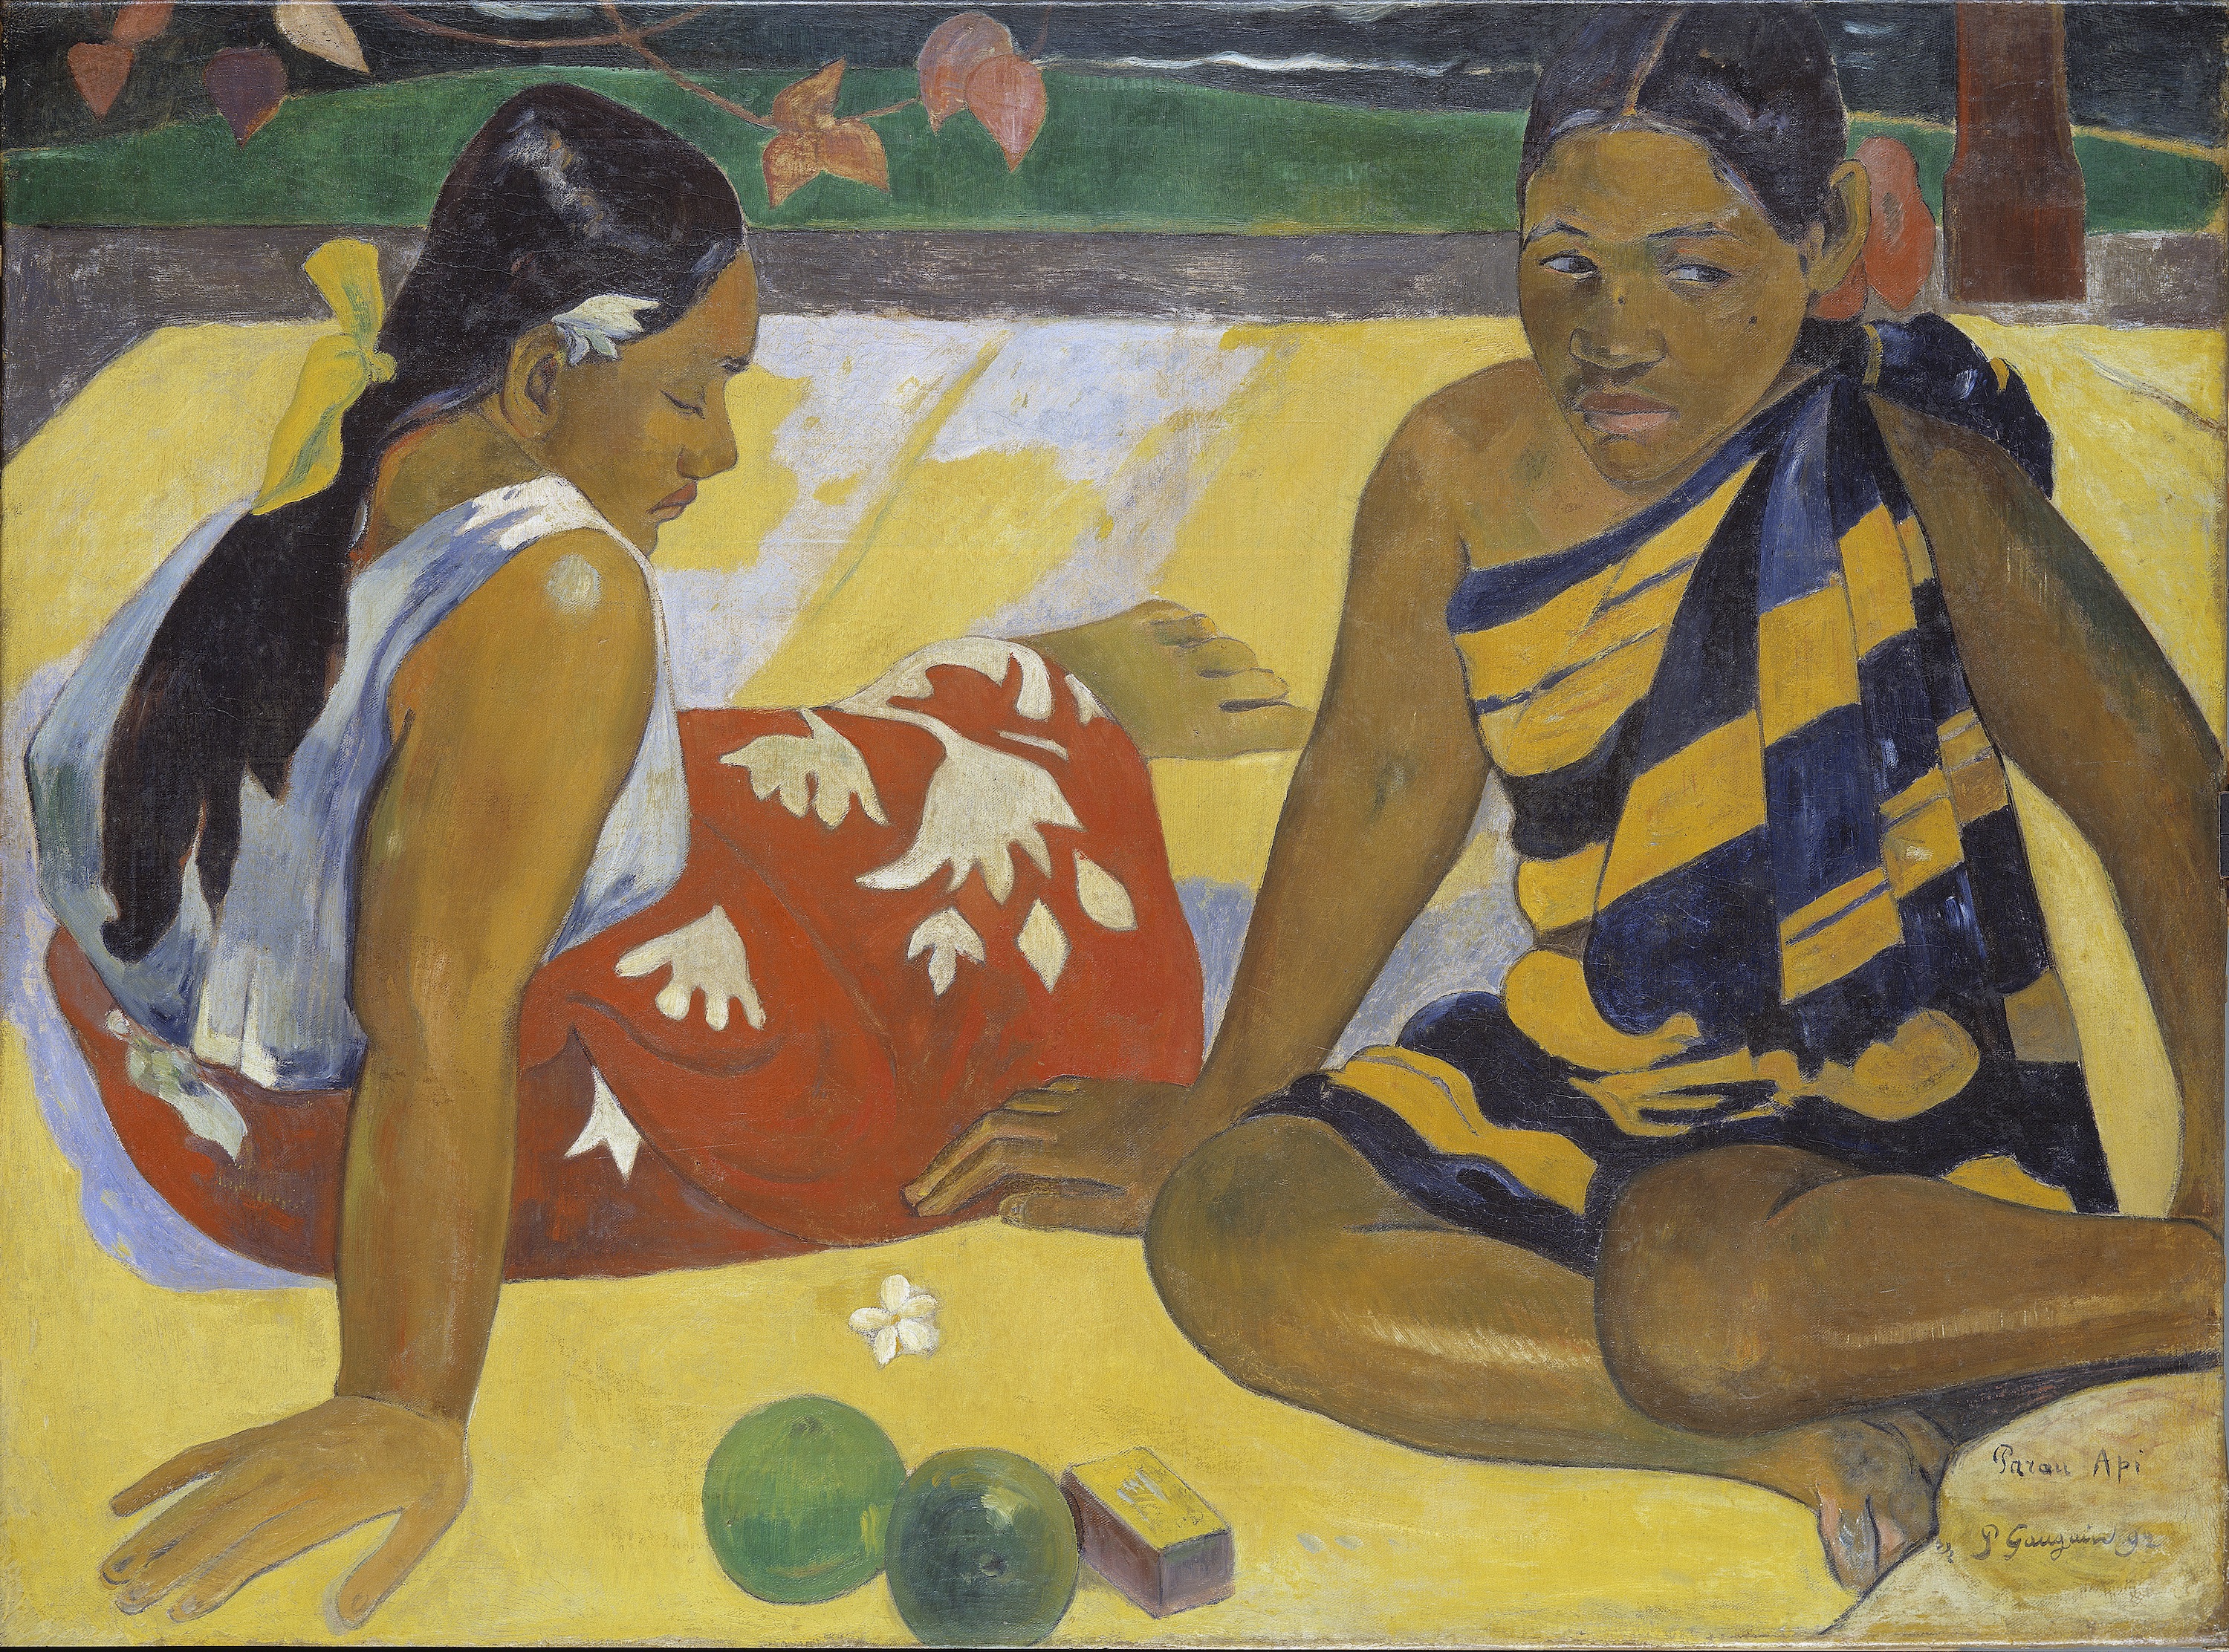 Parau Api, wat nieuws by Paul Gauguin - 1892 - 92 x 67 cm Staatliche Kunstsammlungen Dresden